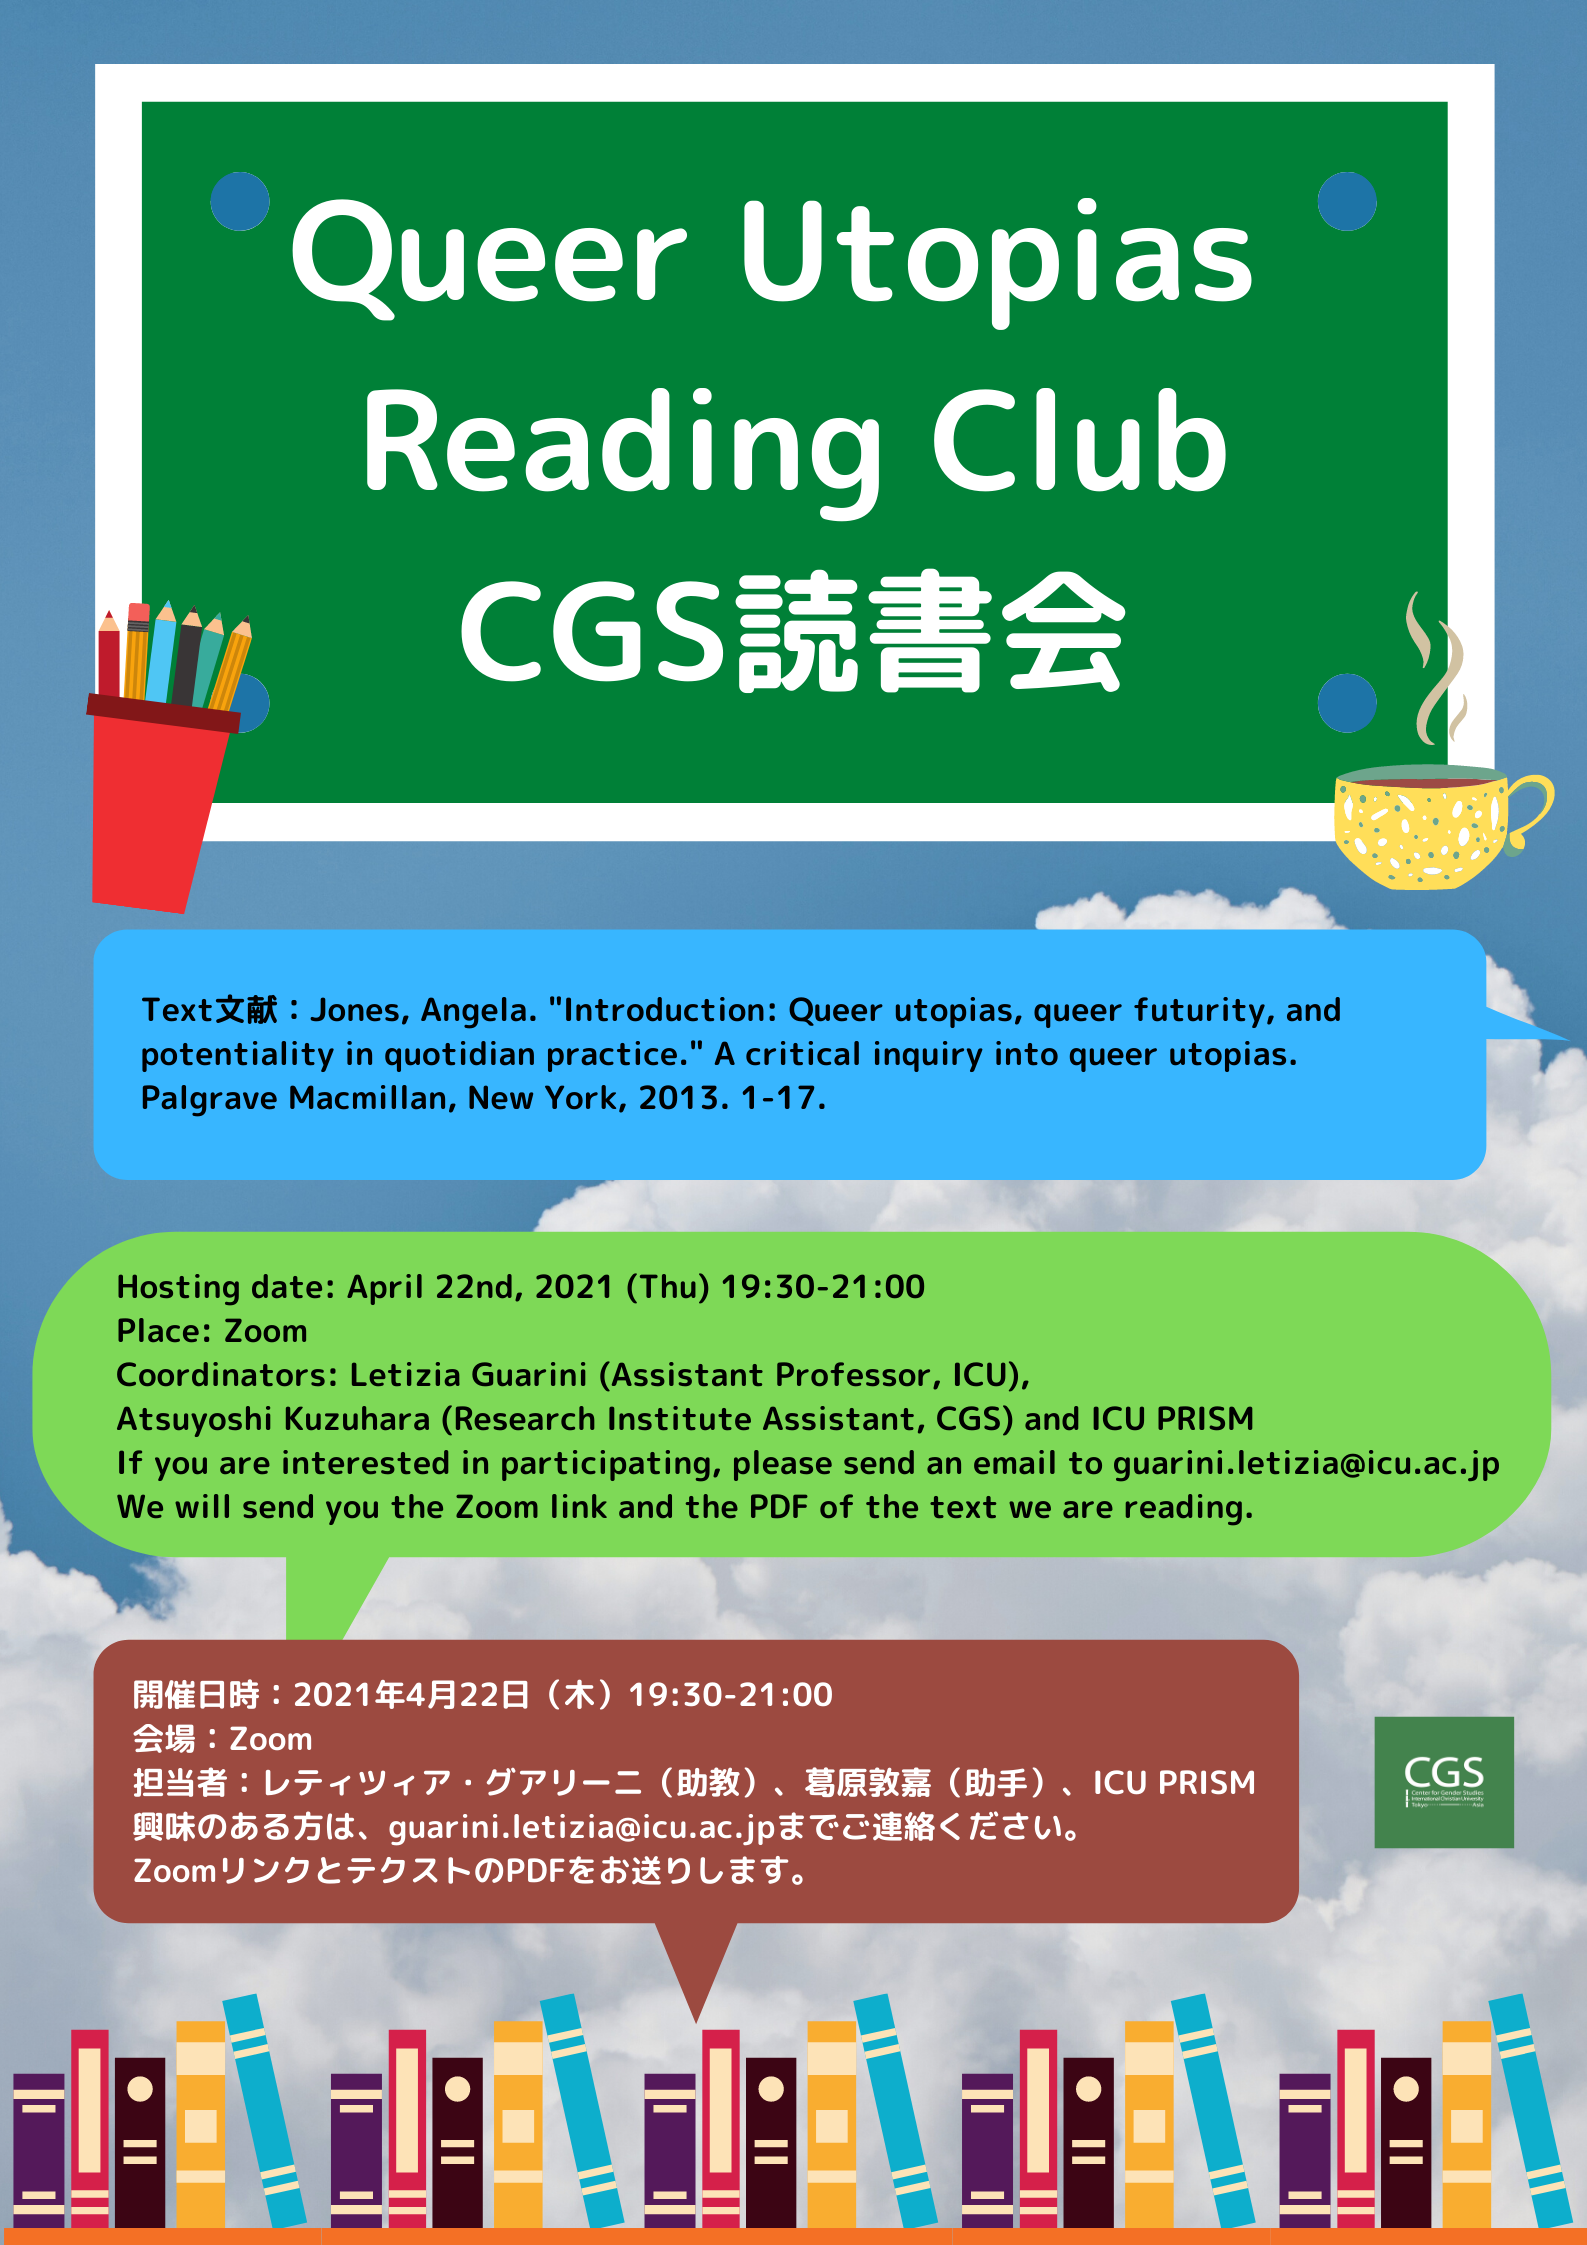 CGS Reading Club.png